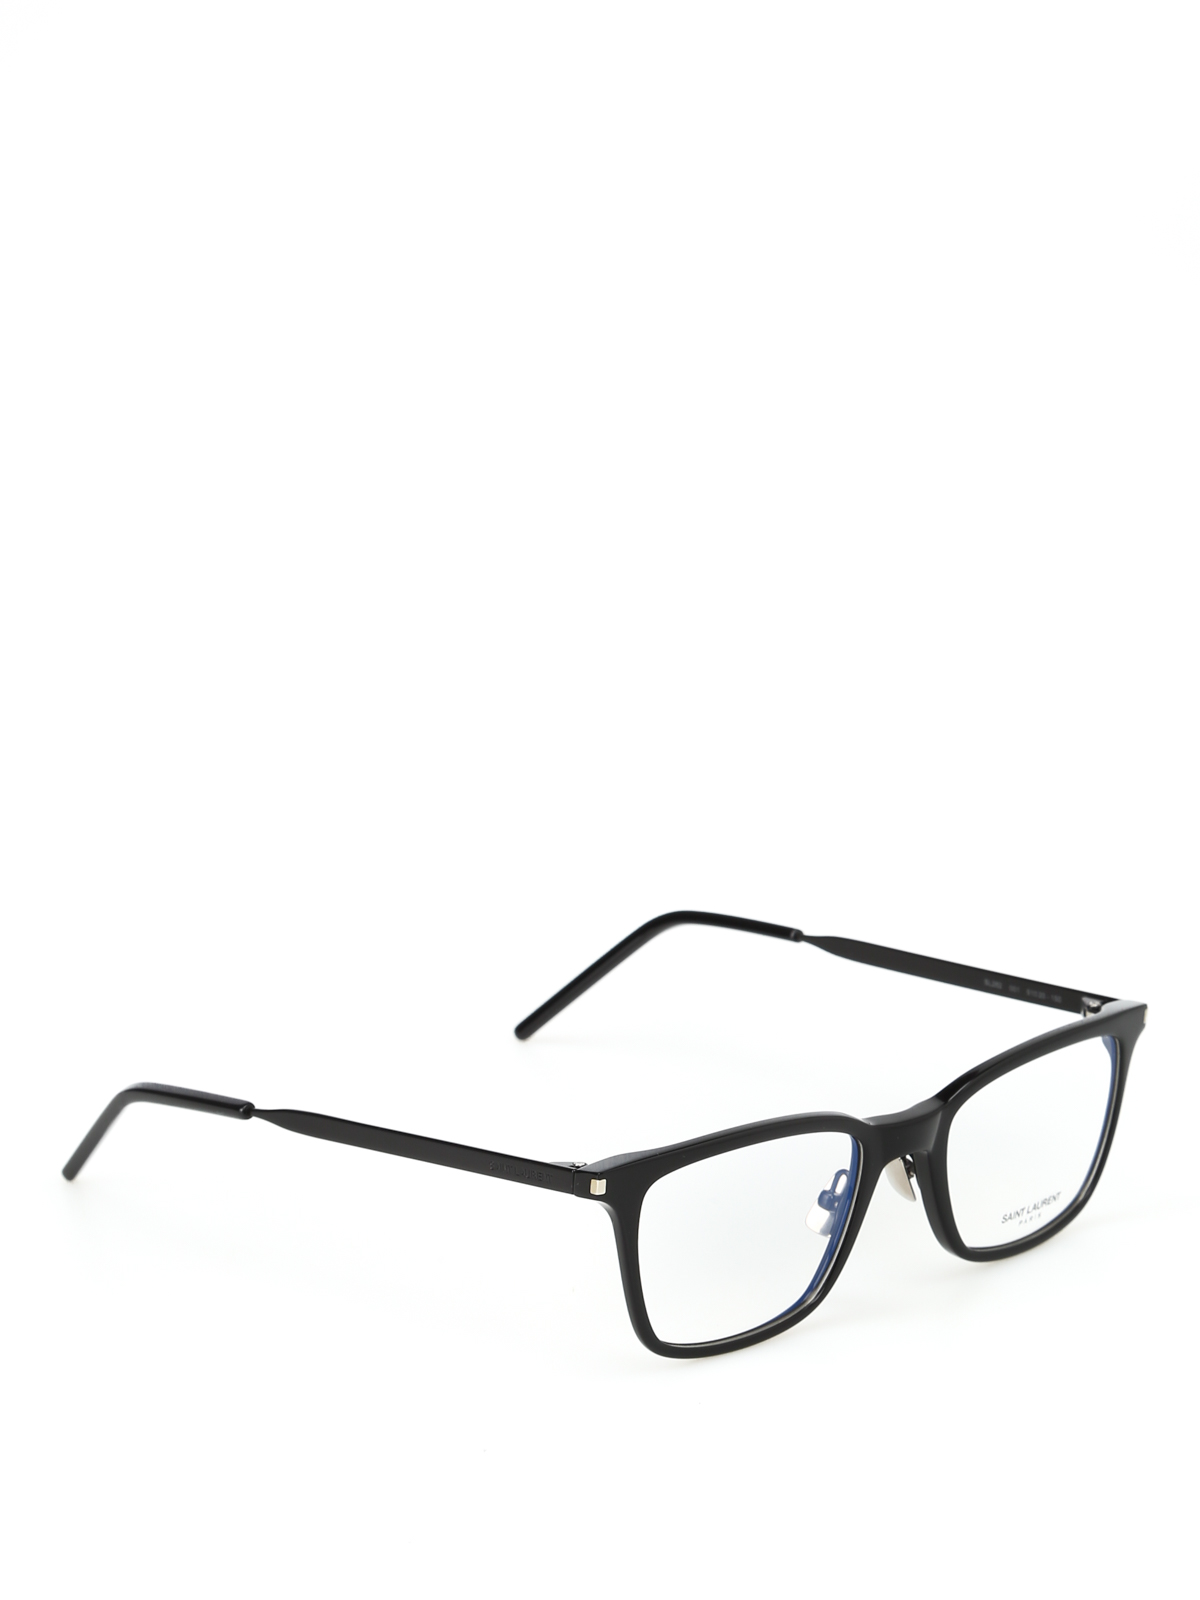 Glasses Saint Laurent - Black acetate and metal eyeglasses - SL262001